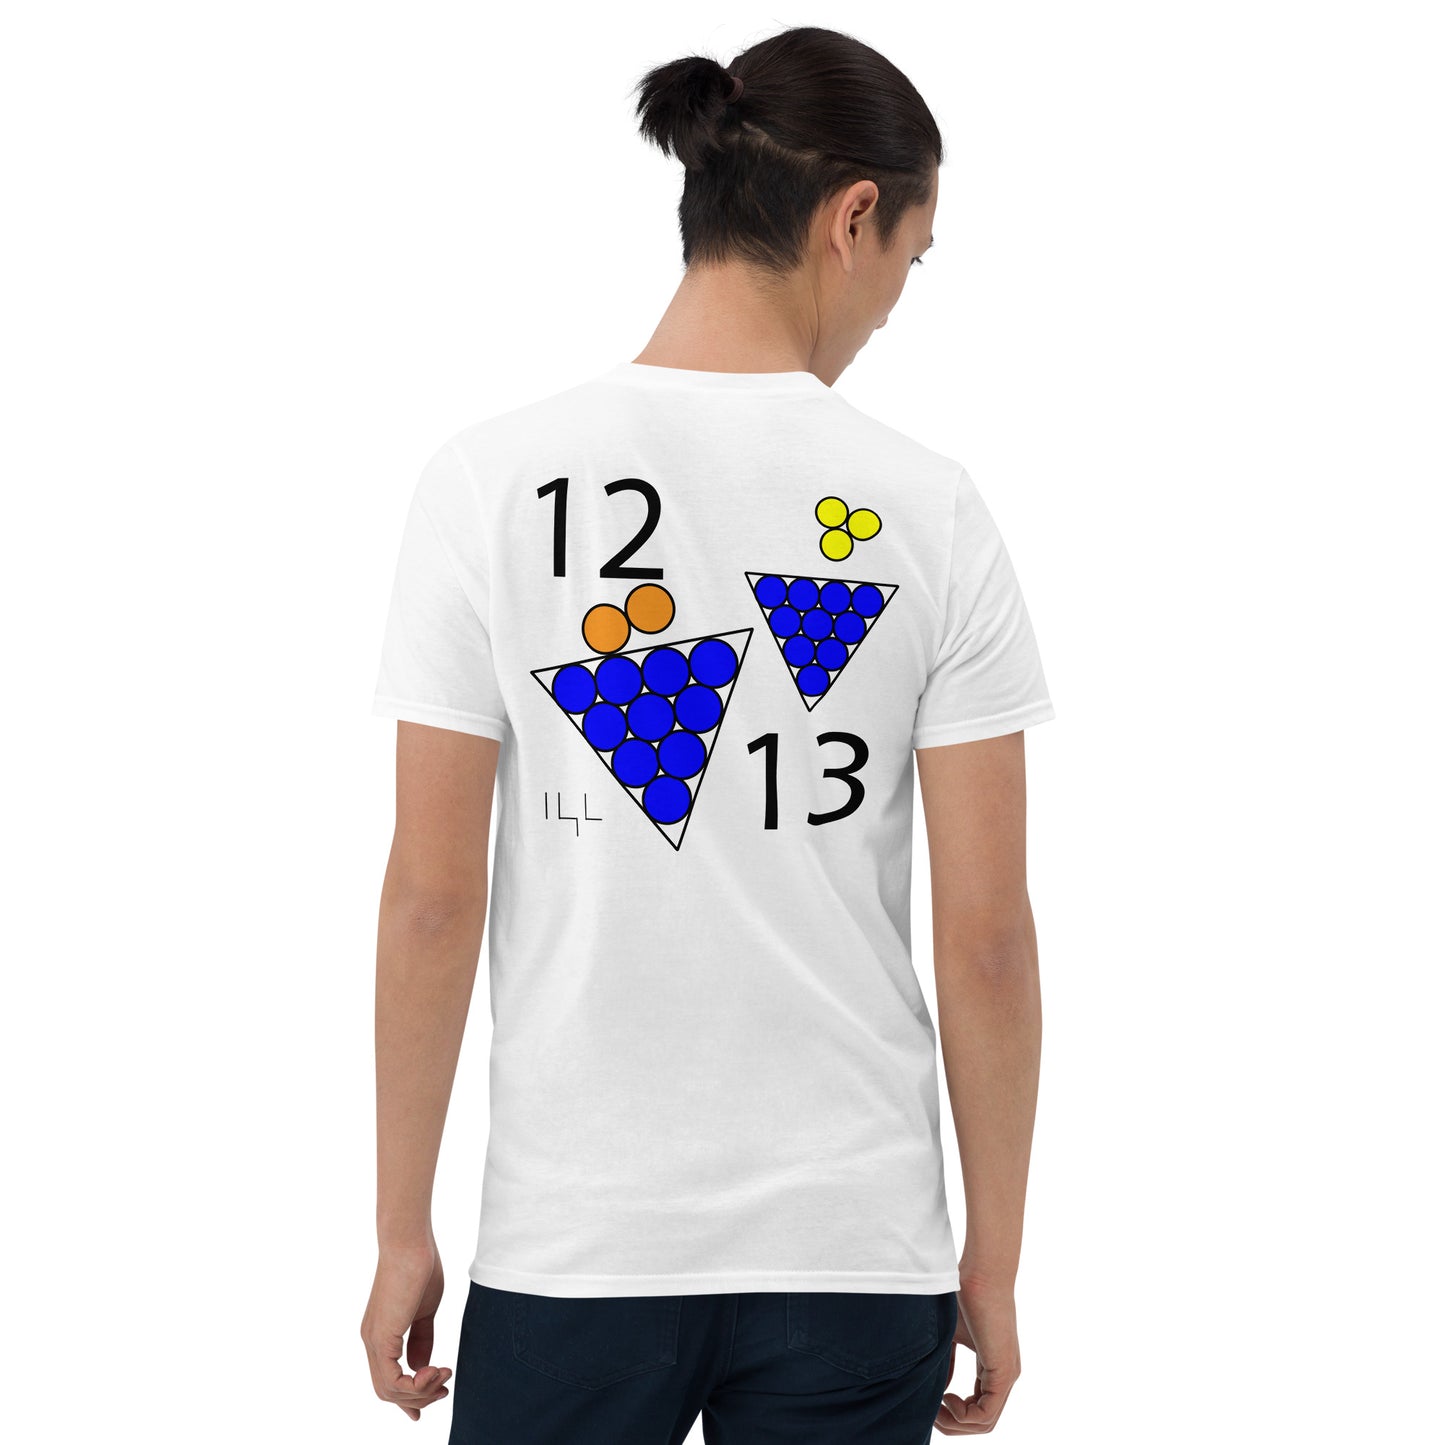 December 13th Blue T-Shirt at 12:13 1213